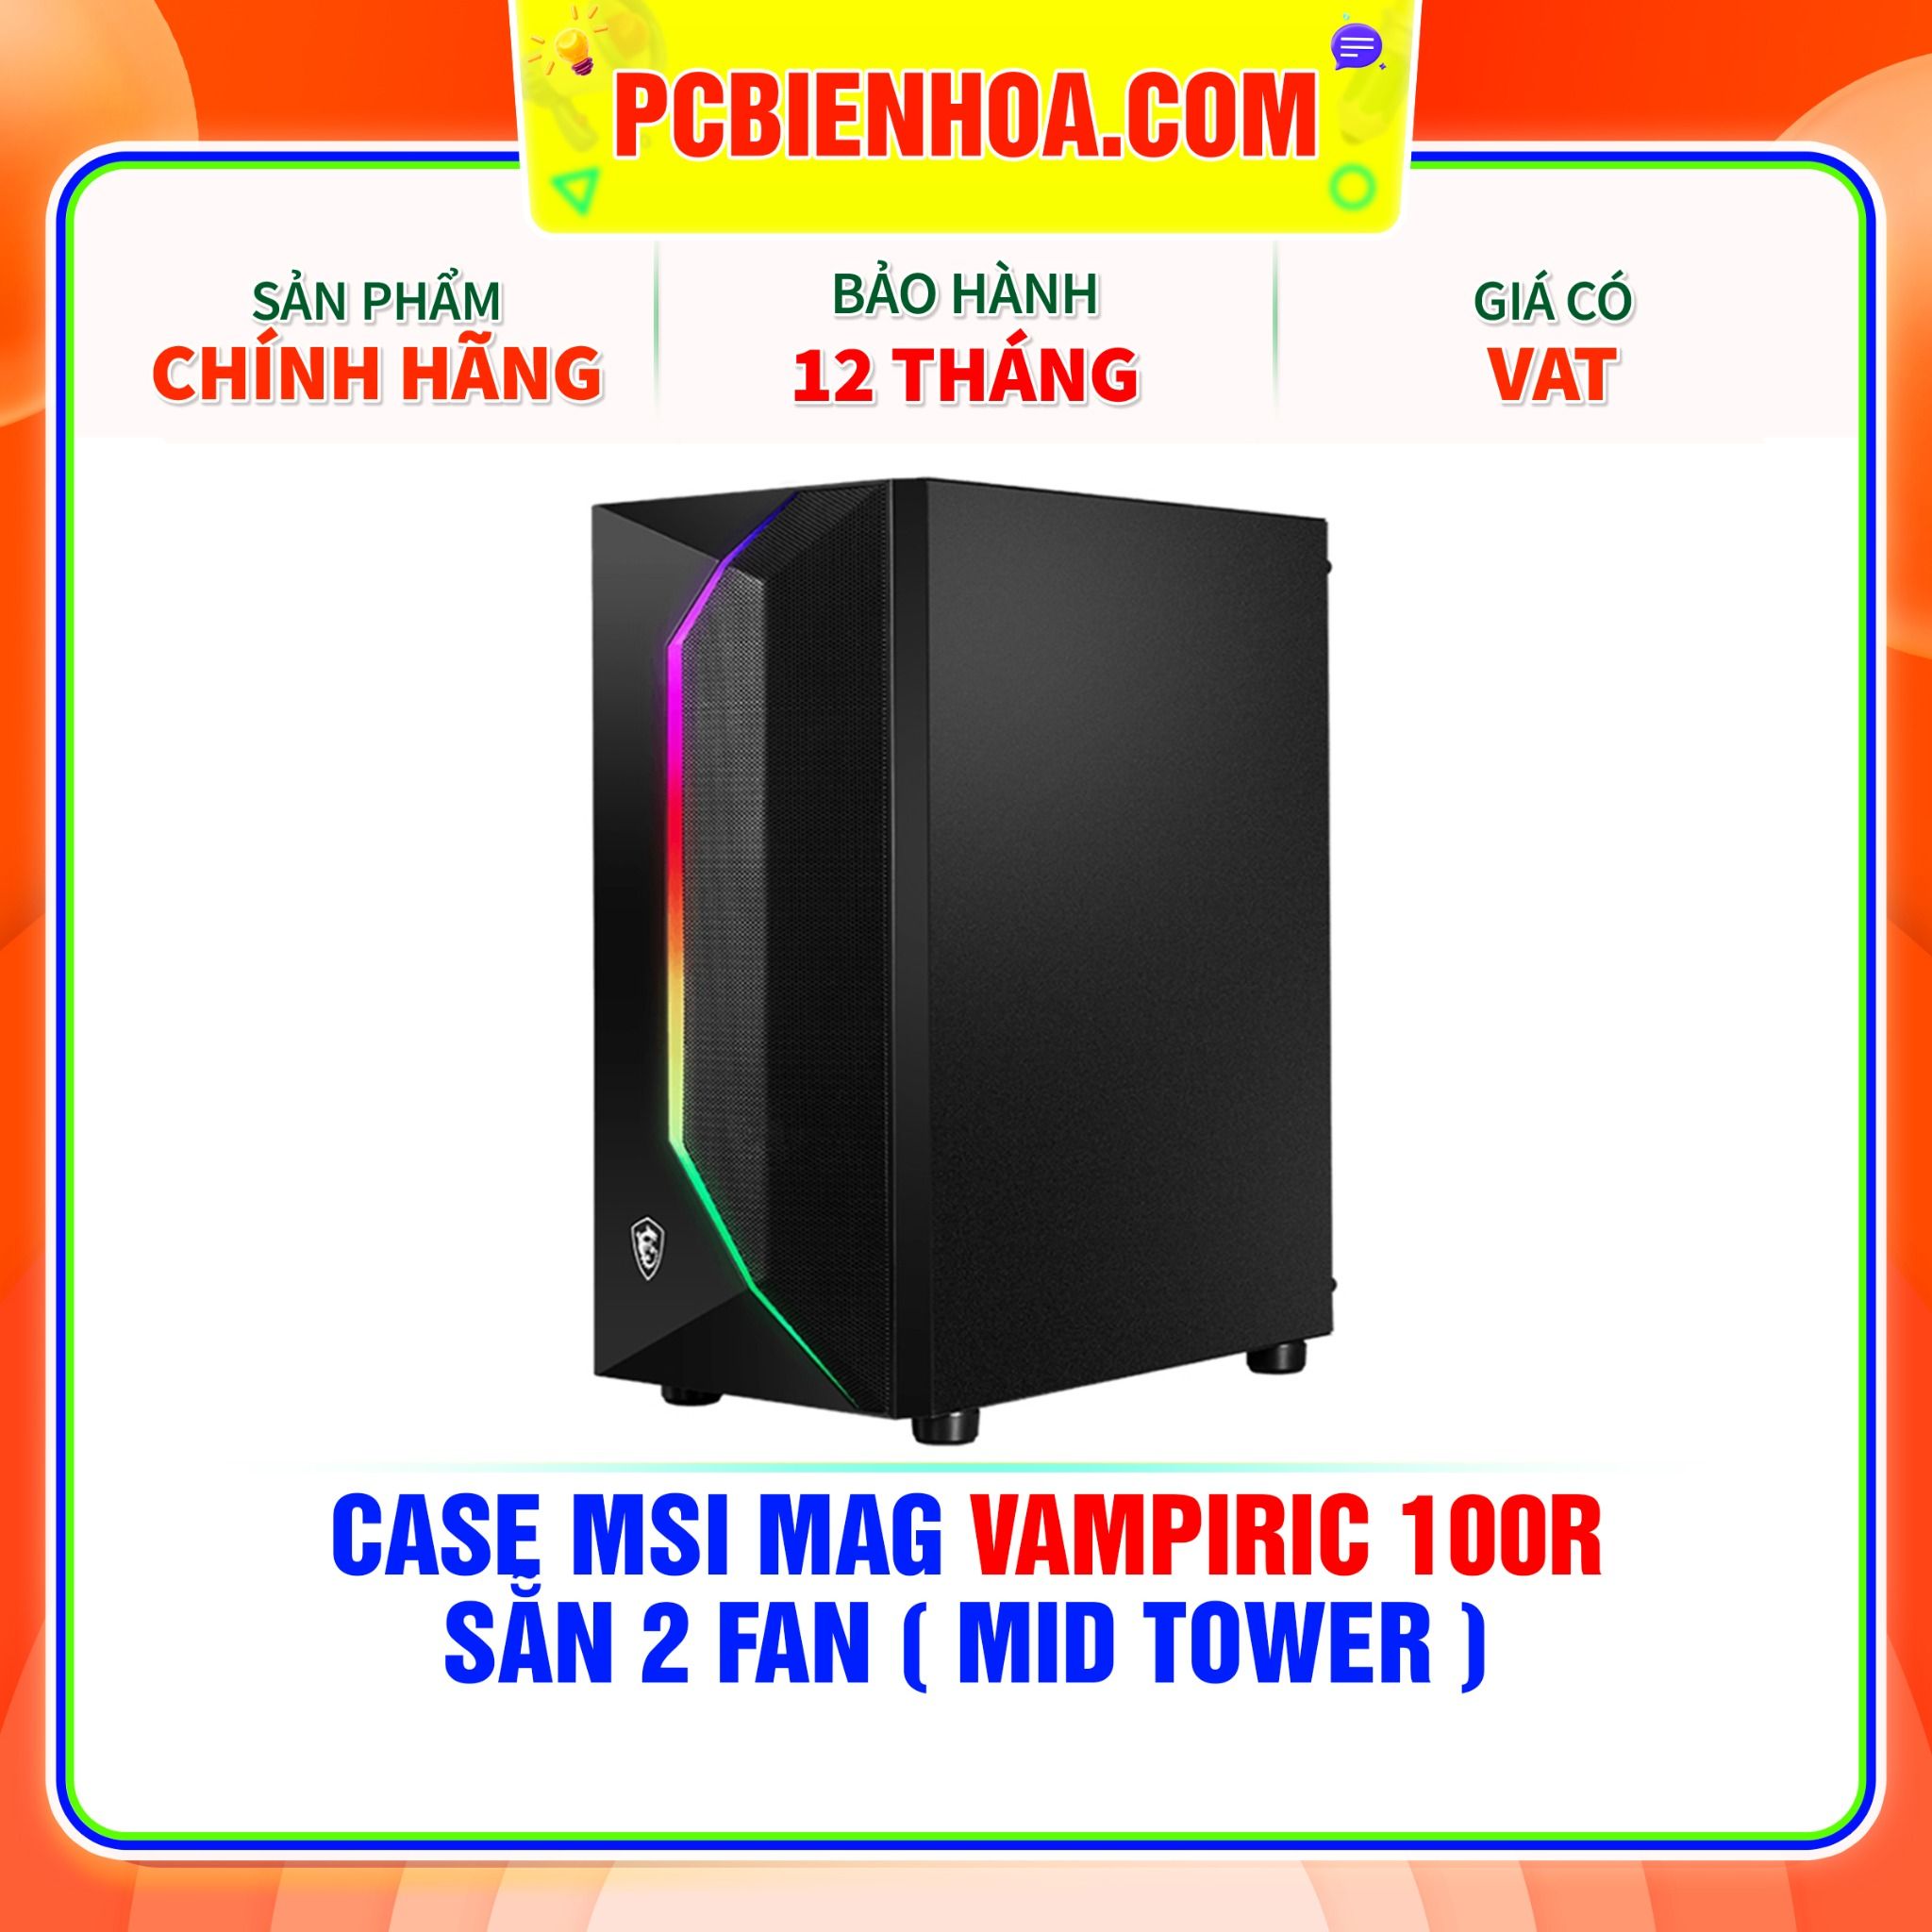  CASE MSI MAG VAMPIRIC 100R - SẴN 2 FAN ( MID TOWER ) 